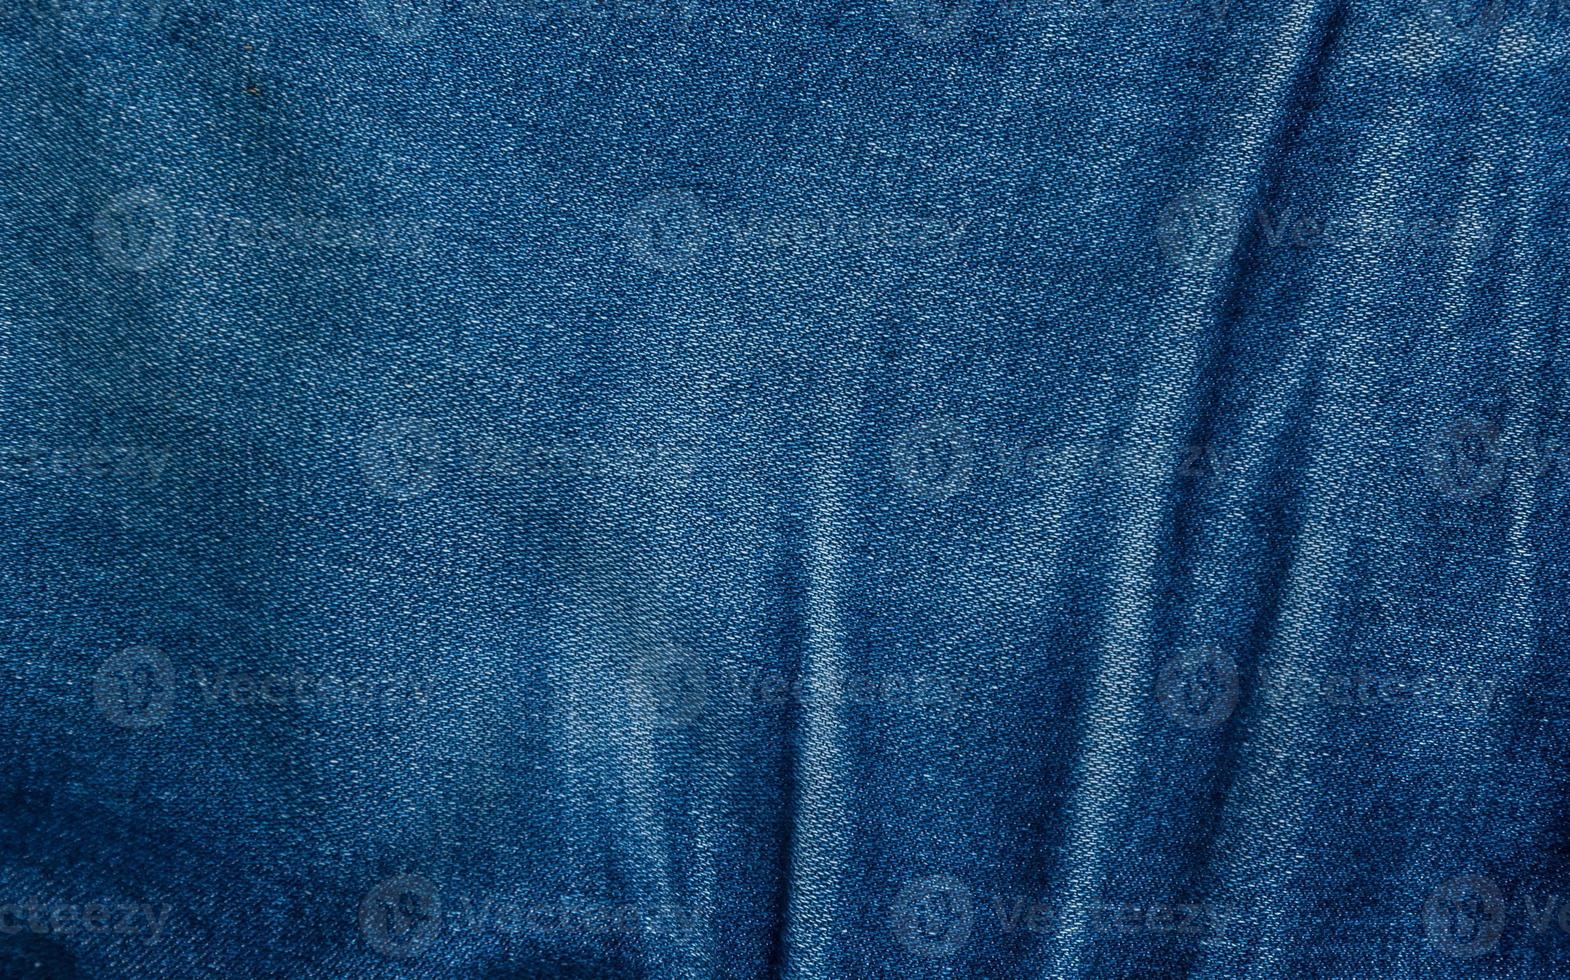 Blue jean background ,Blue denim jeans texture, Jeans background photo